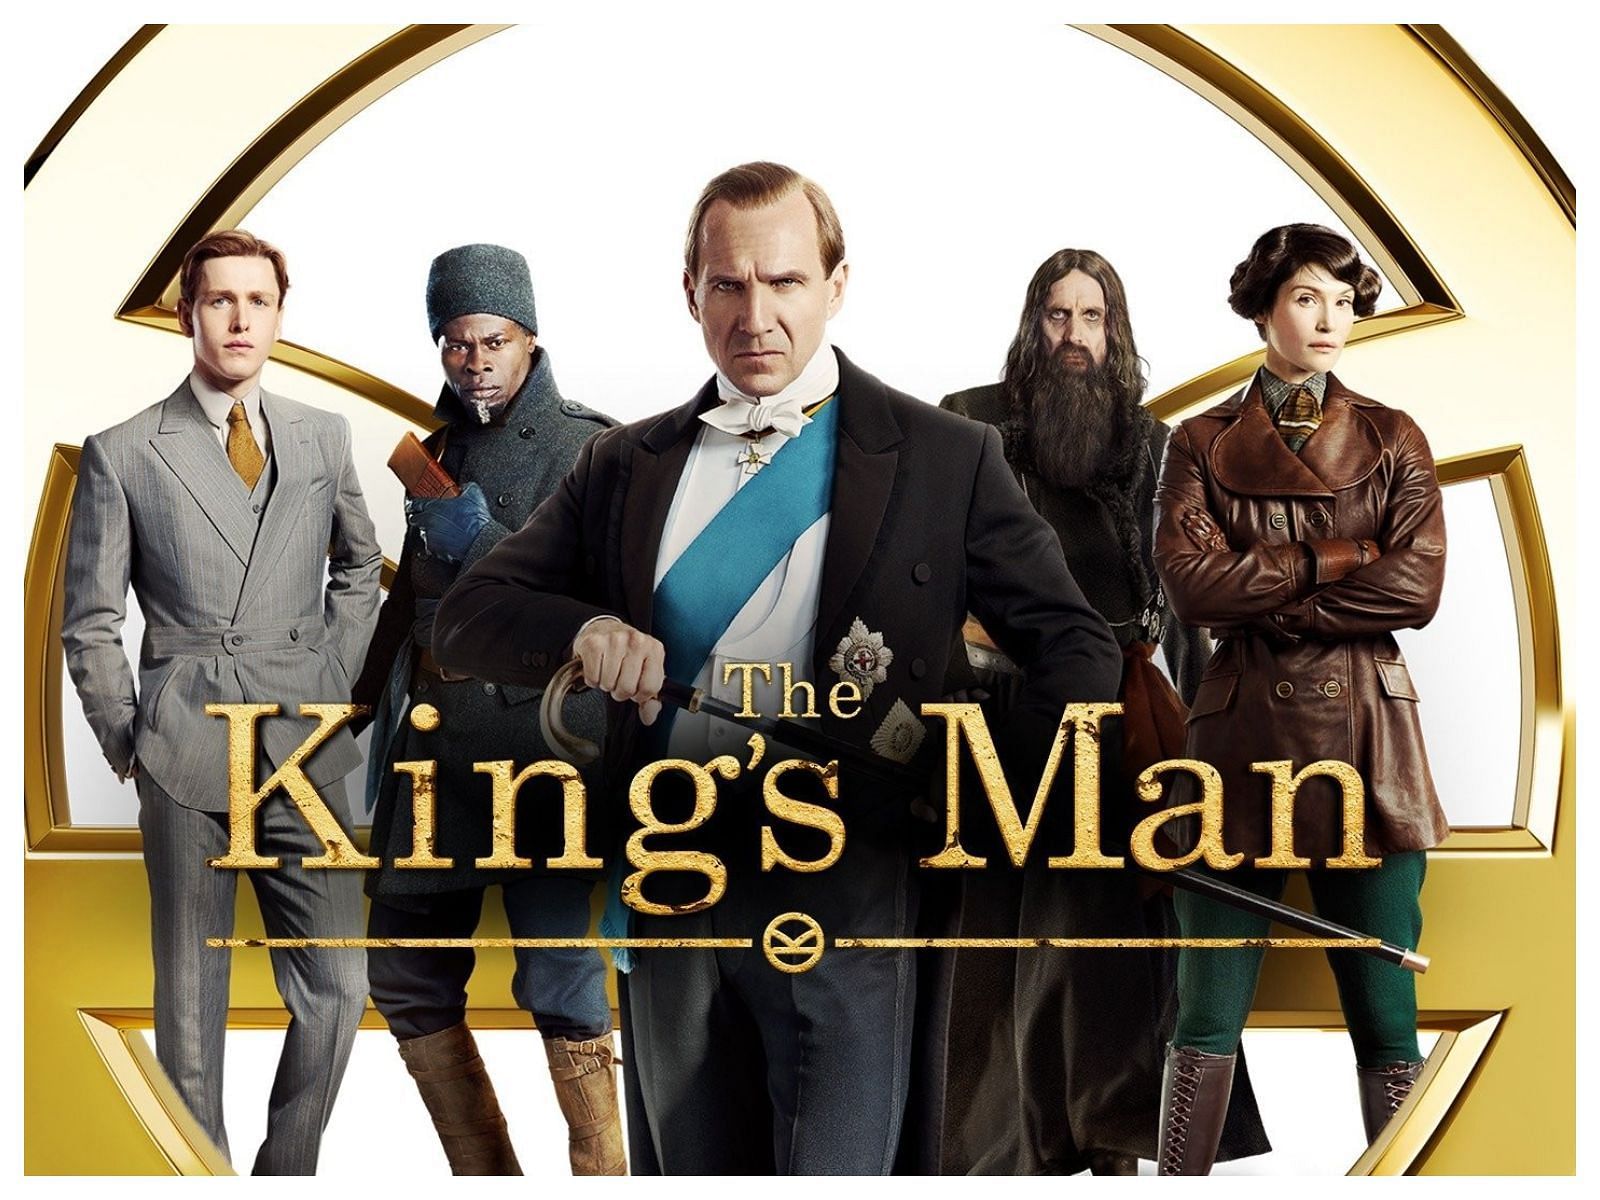 Kingsman 3 is set to be expedited by Matthew Vaughn. (Image via Marv Studios)